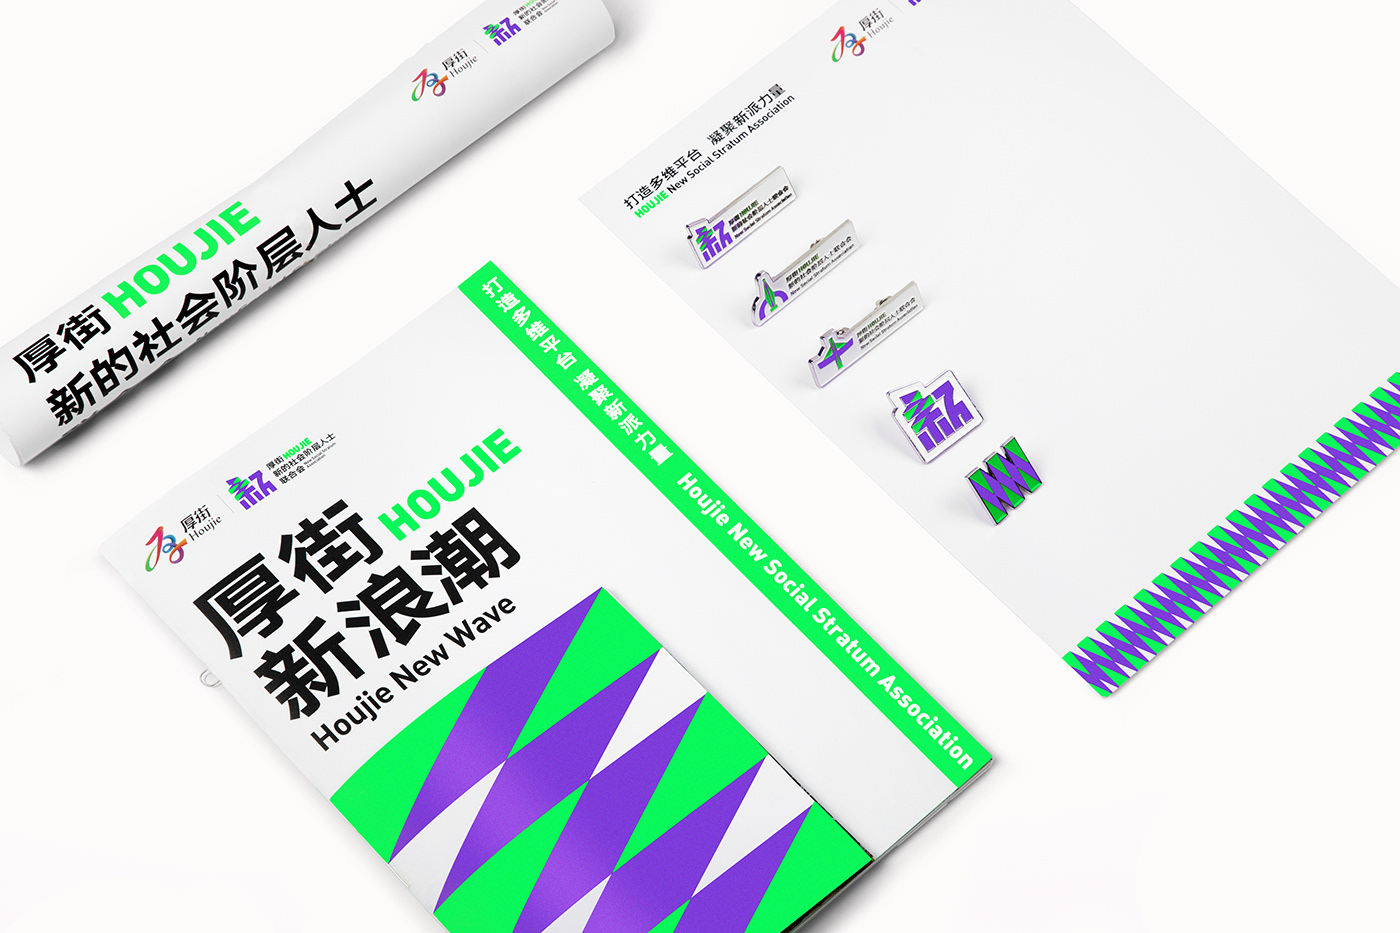 dongguan xiexie design Printing Guidance visual identity design